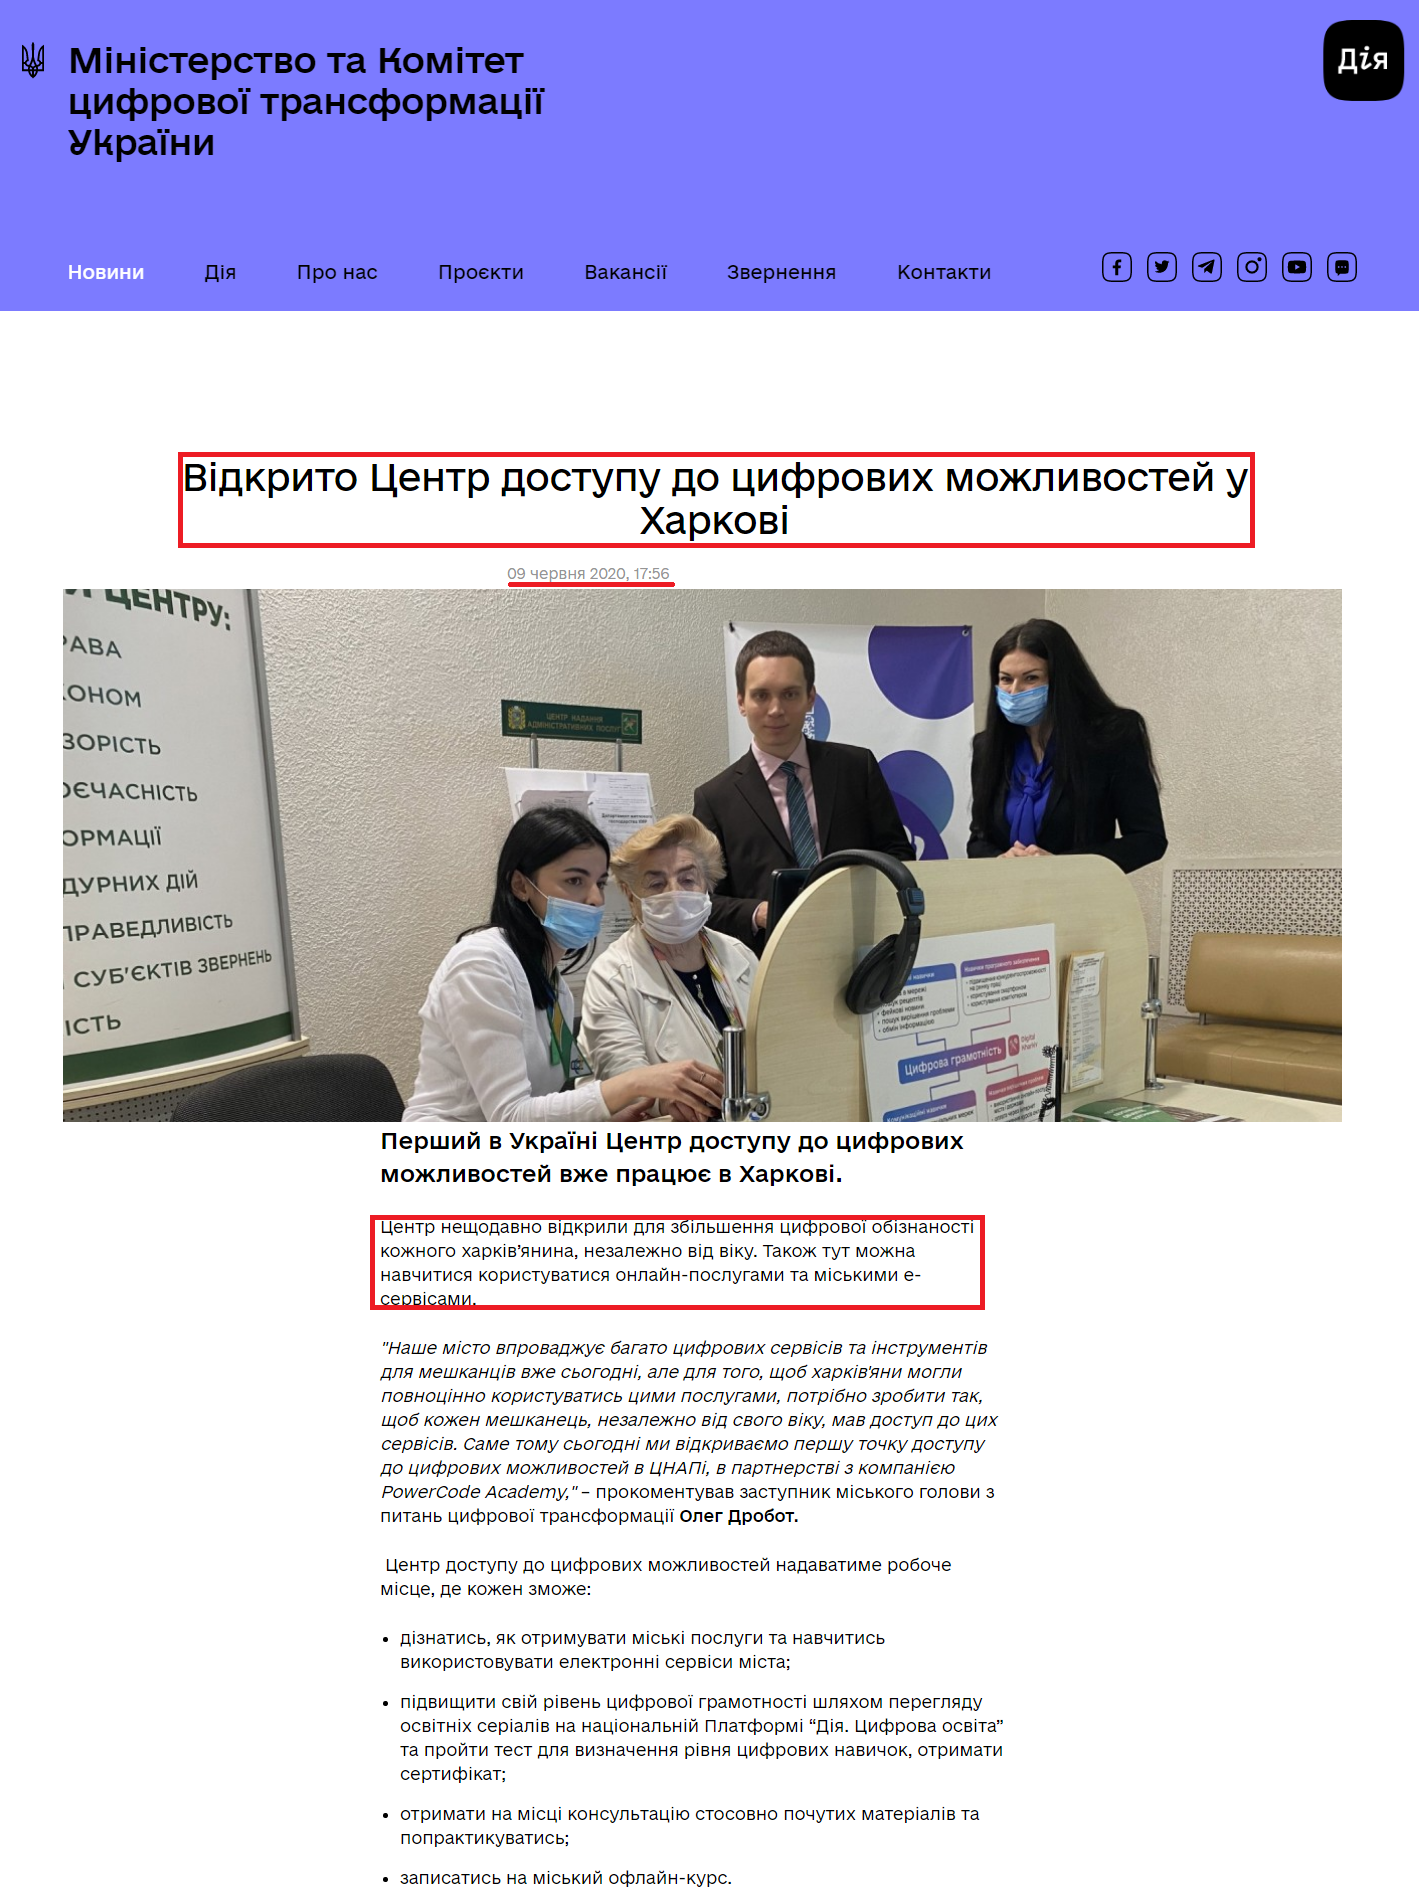 https://thedigital.gov.ua/news/vidkrito-tsentr-dostupu-do-tsifrovikh-mozhlivostey-u-kharkovi